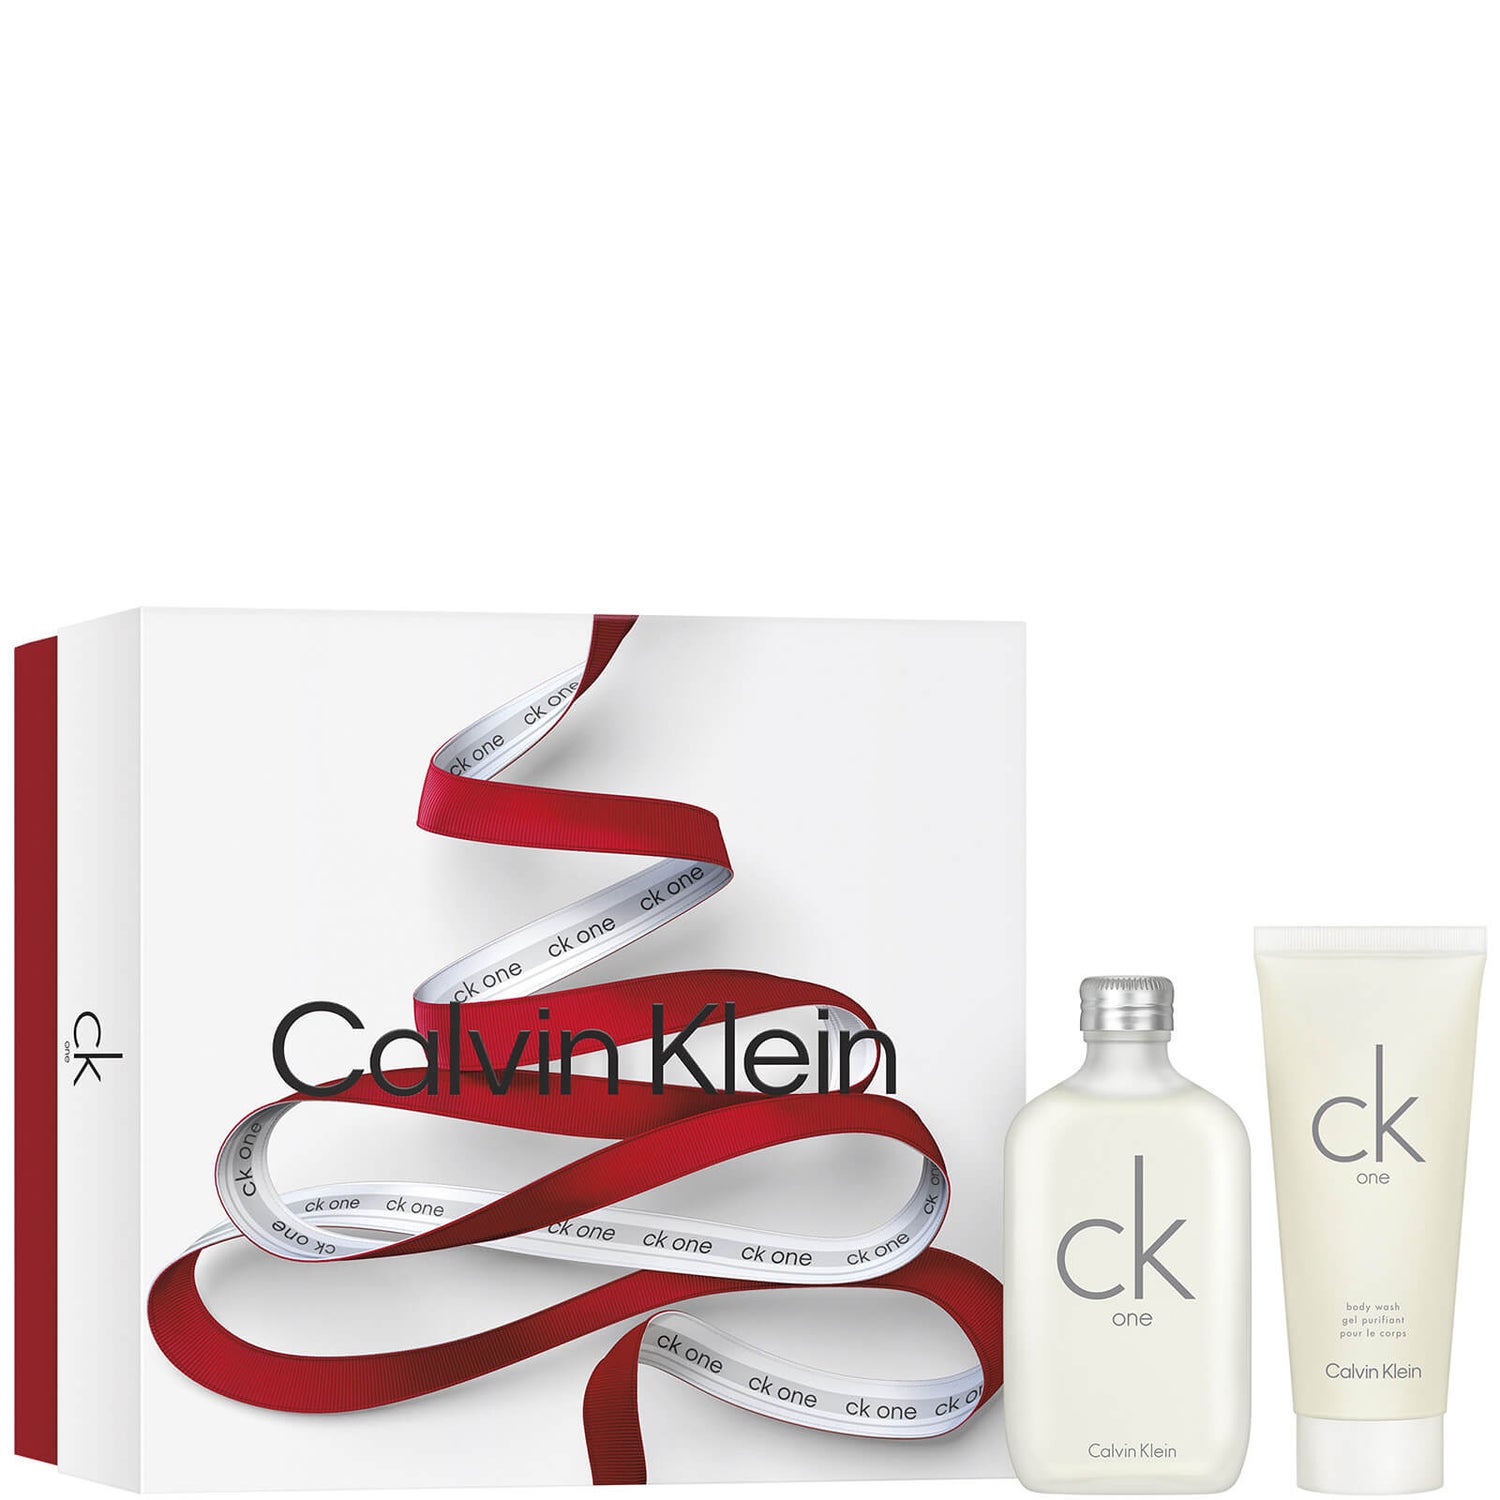 Calvin Klein CK One Eau de Toilette 100ml Gift Set (Worth £53.00)